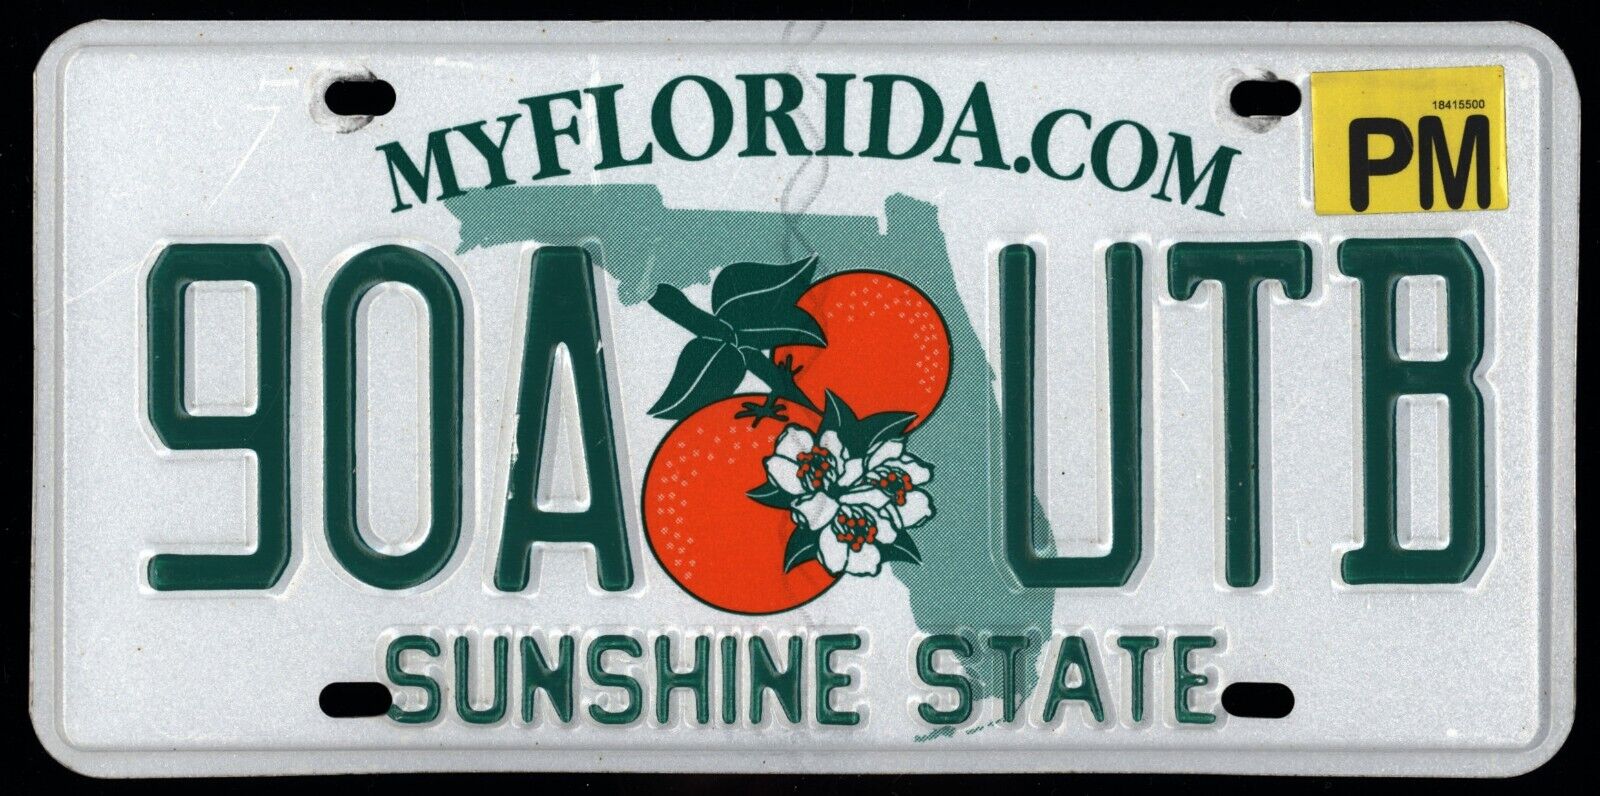 FLORIDA c.2020 License Plate #90A UTB myFlorida.com / double orange - expired PM